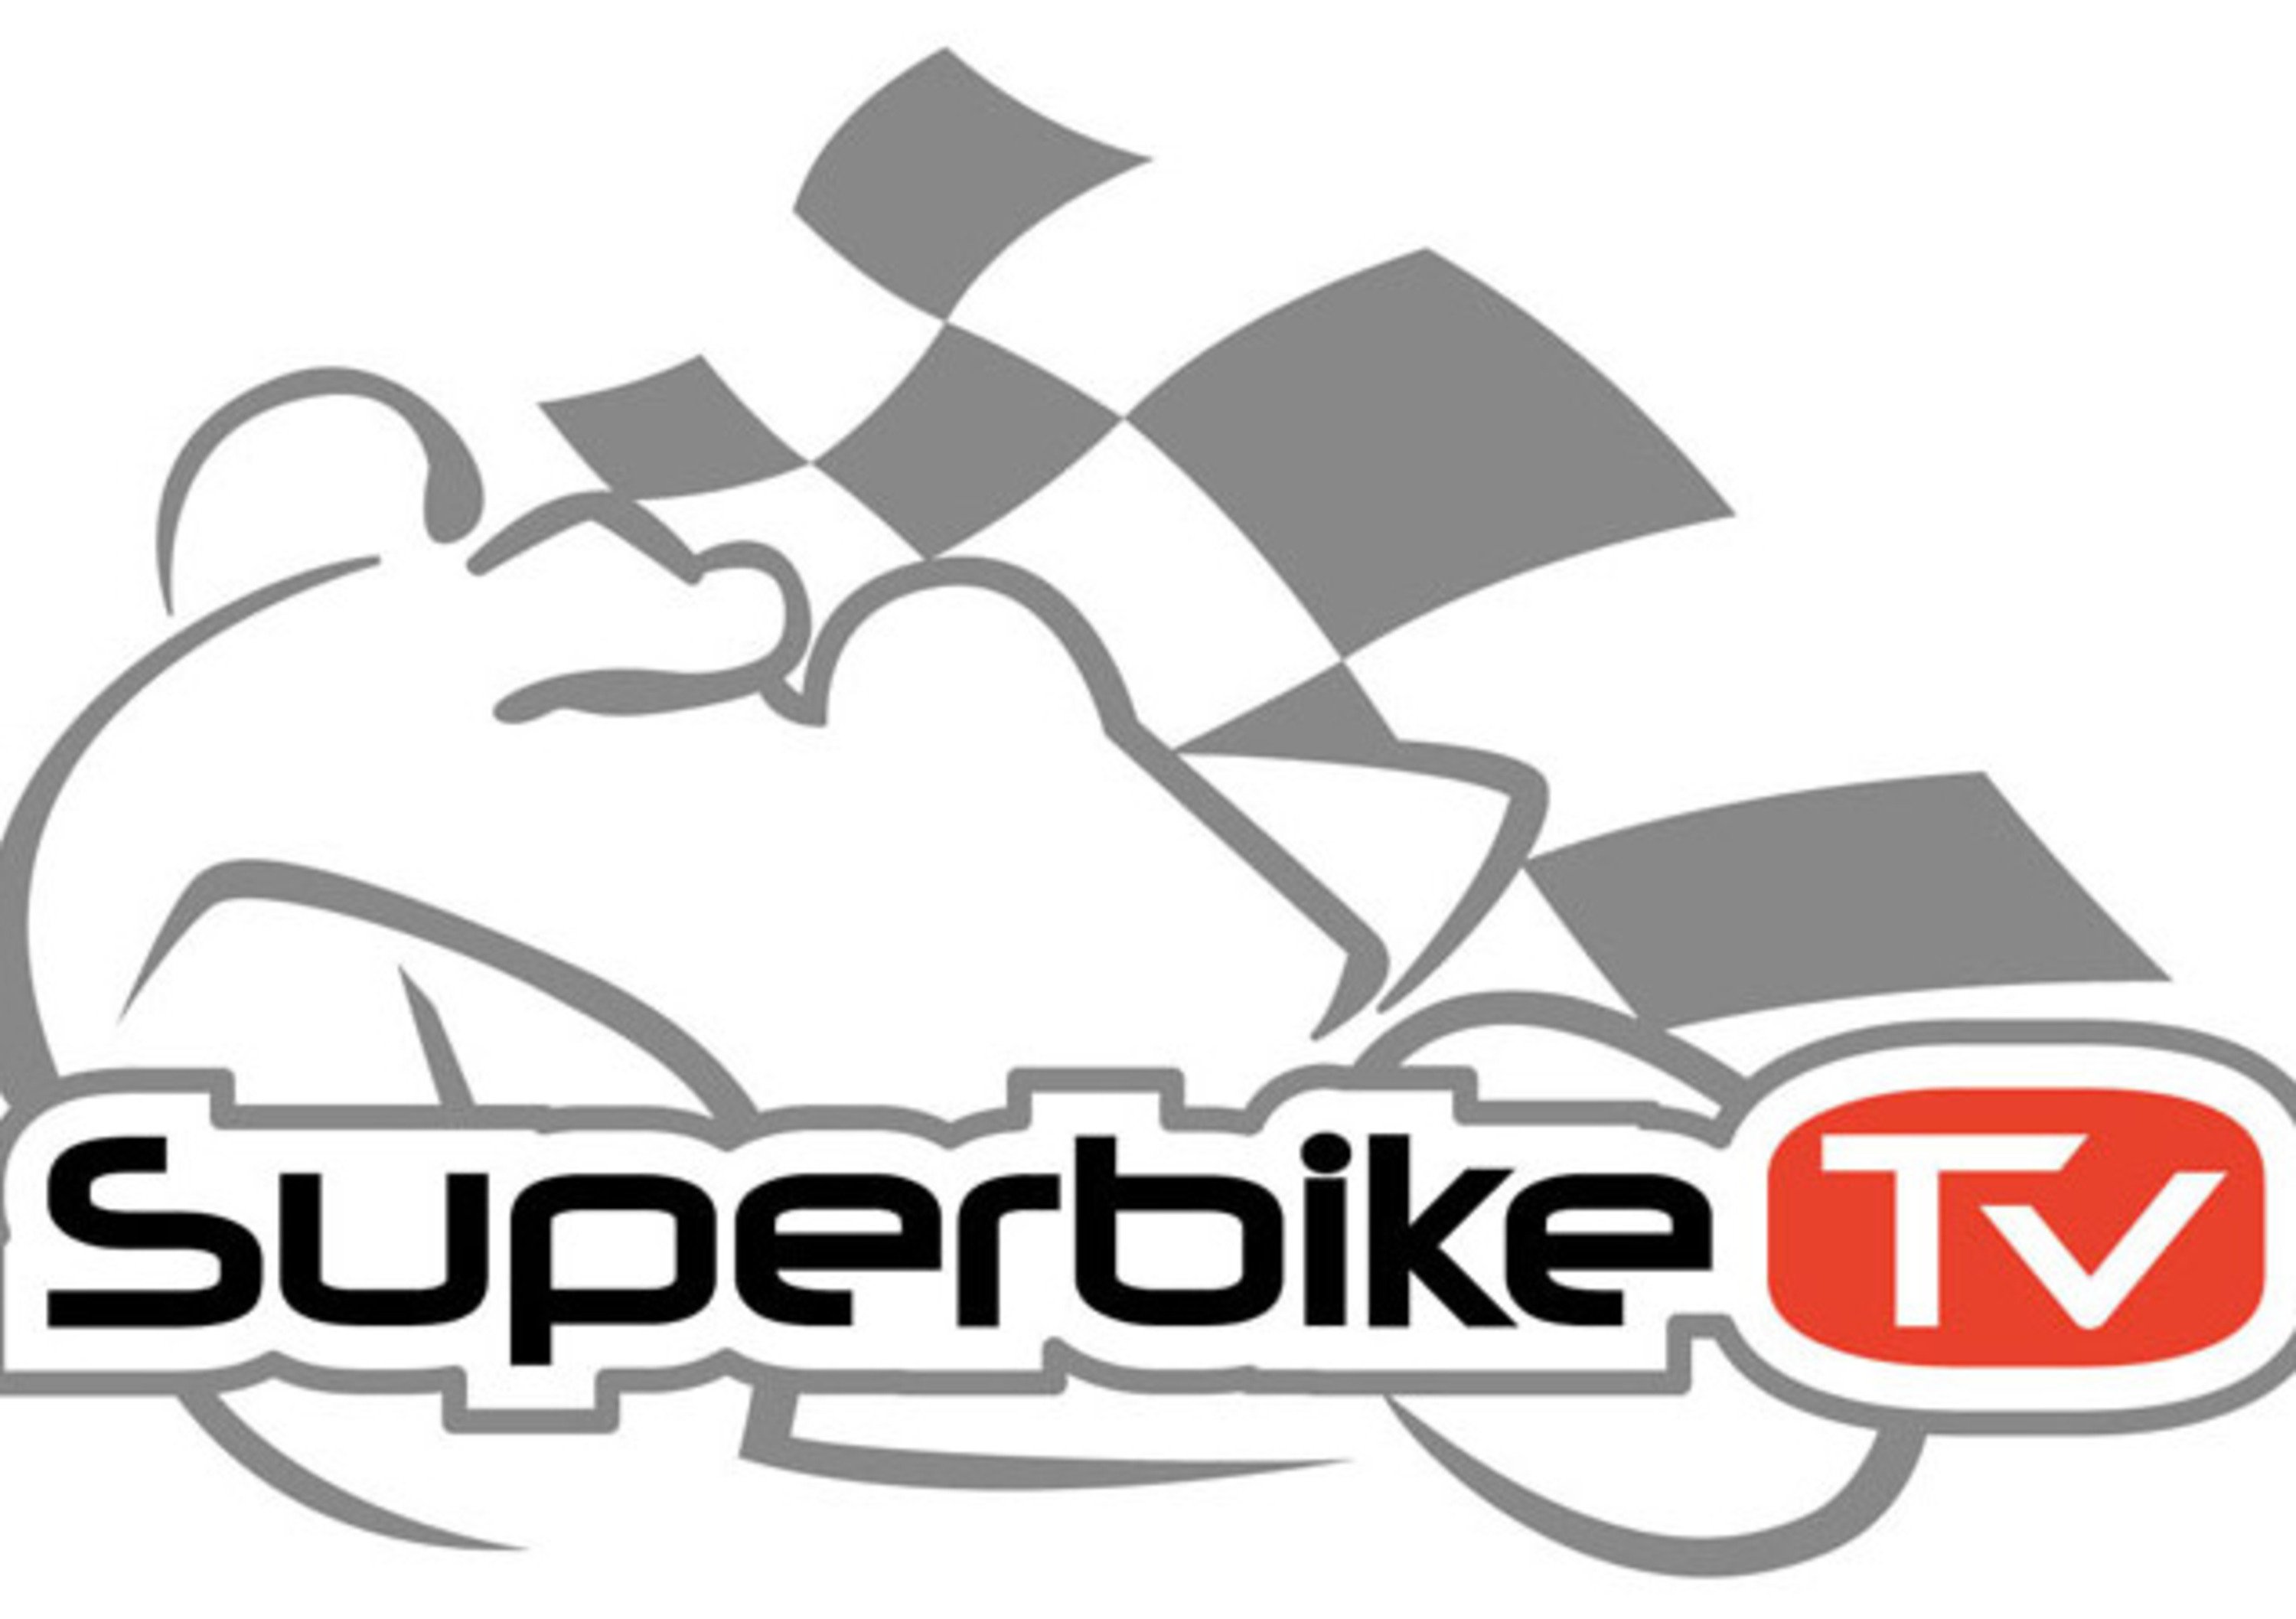 Superbike TV diventa canale ufficiale di Virgilio